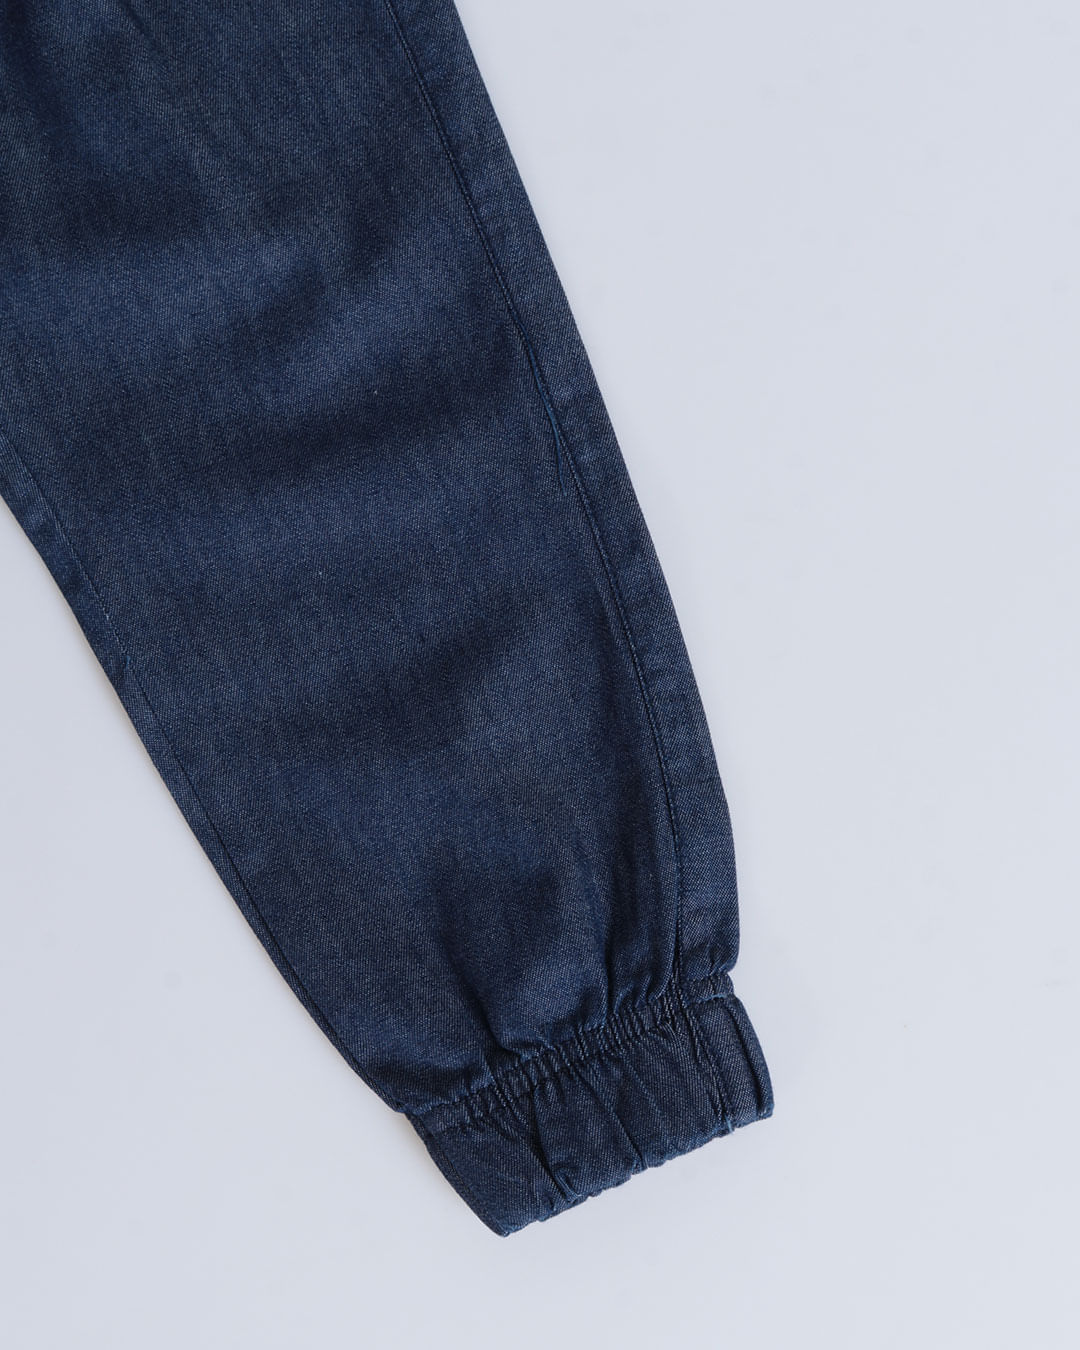 39521000087045-blue-jeans-medio-4